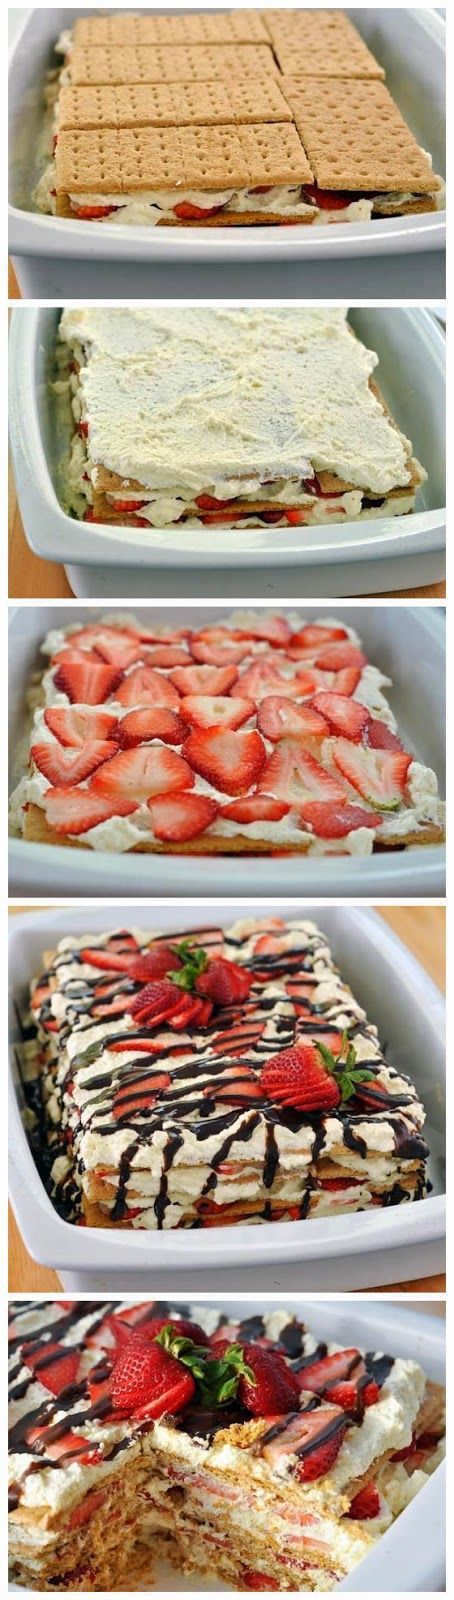 No-Bake Strawberry Icebox Cake – Great item to take to summer family gatherings!